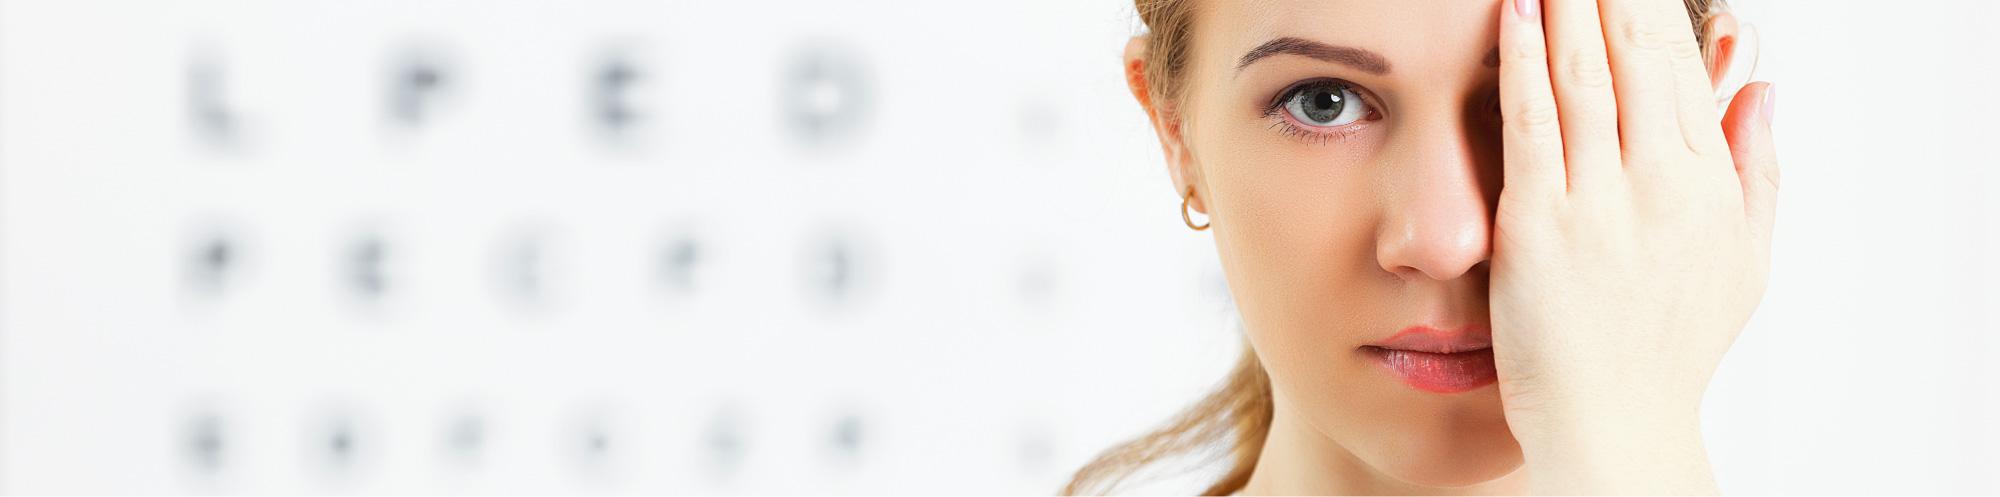 Termin vereinbaren - Augenarztpraxis Buchen